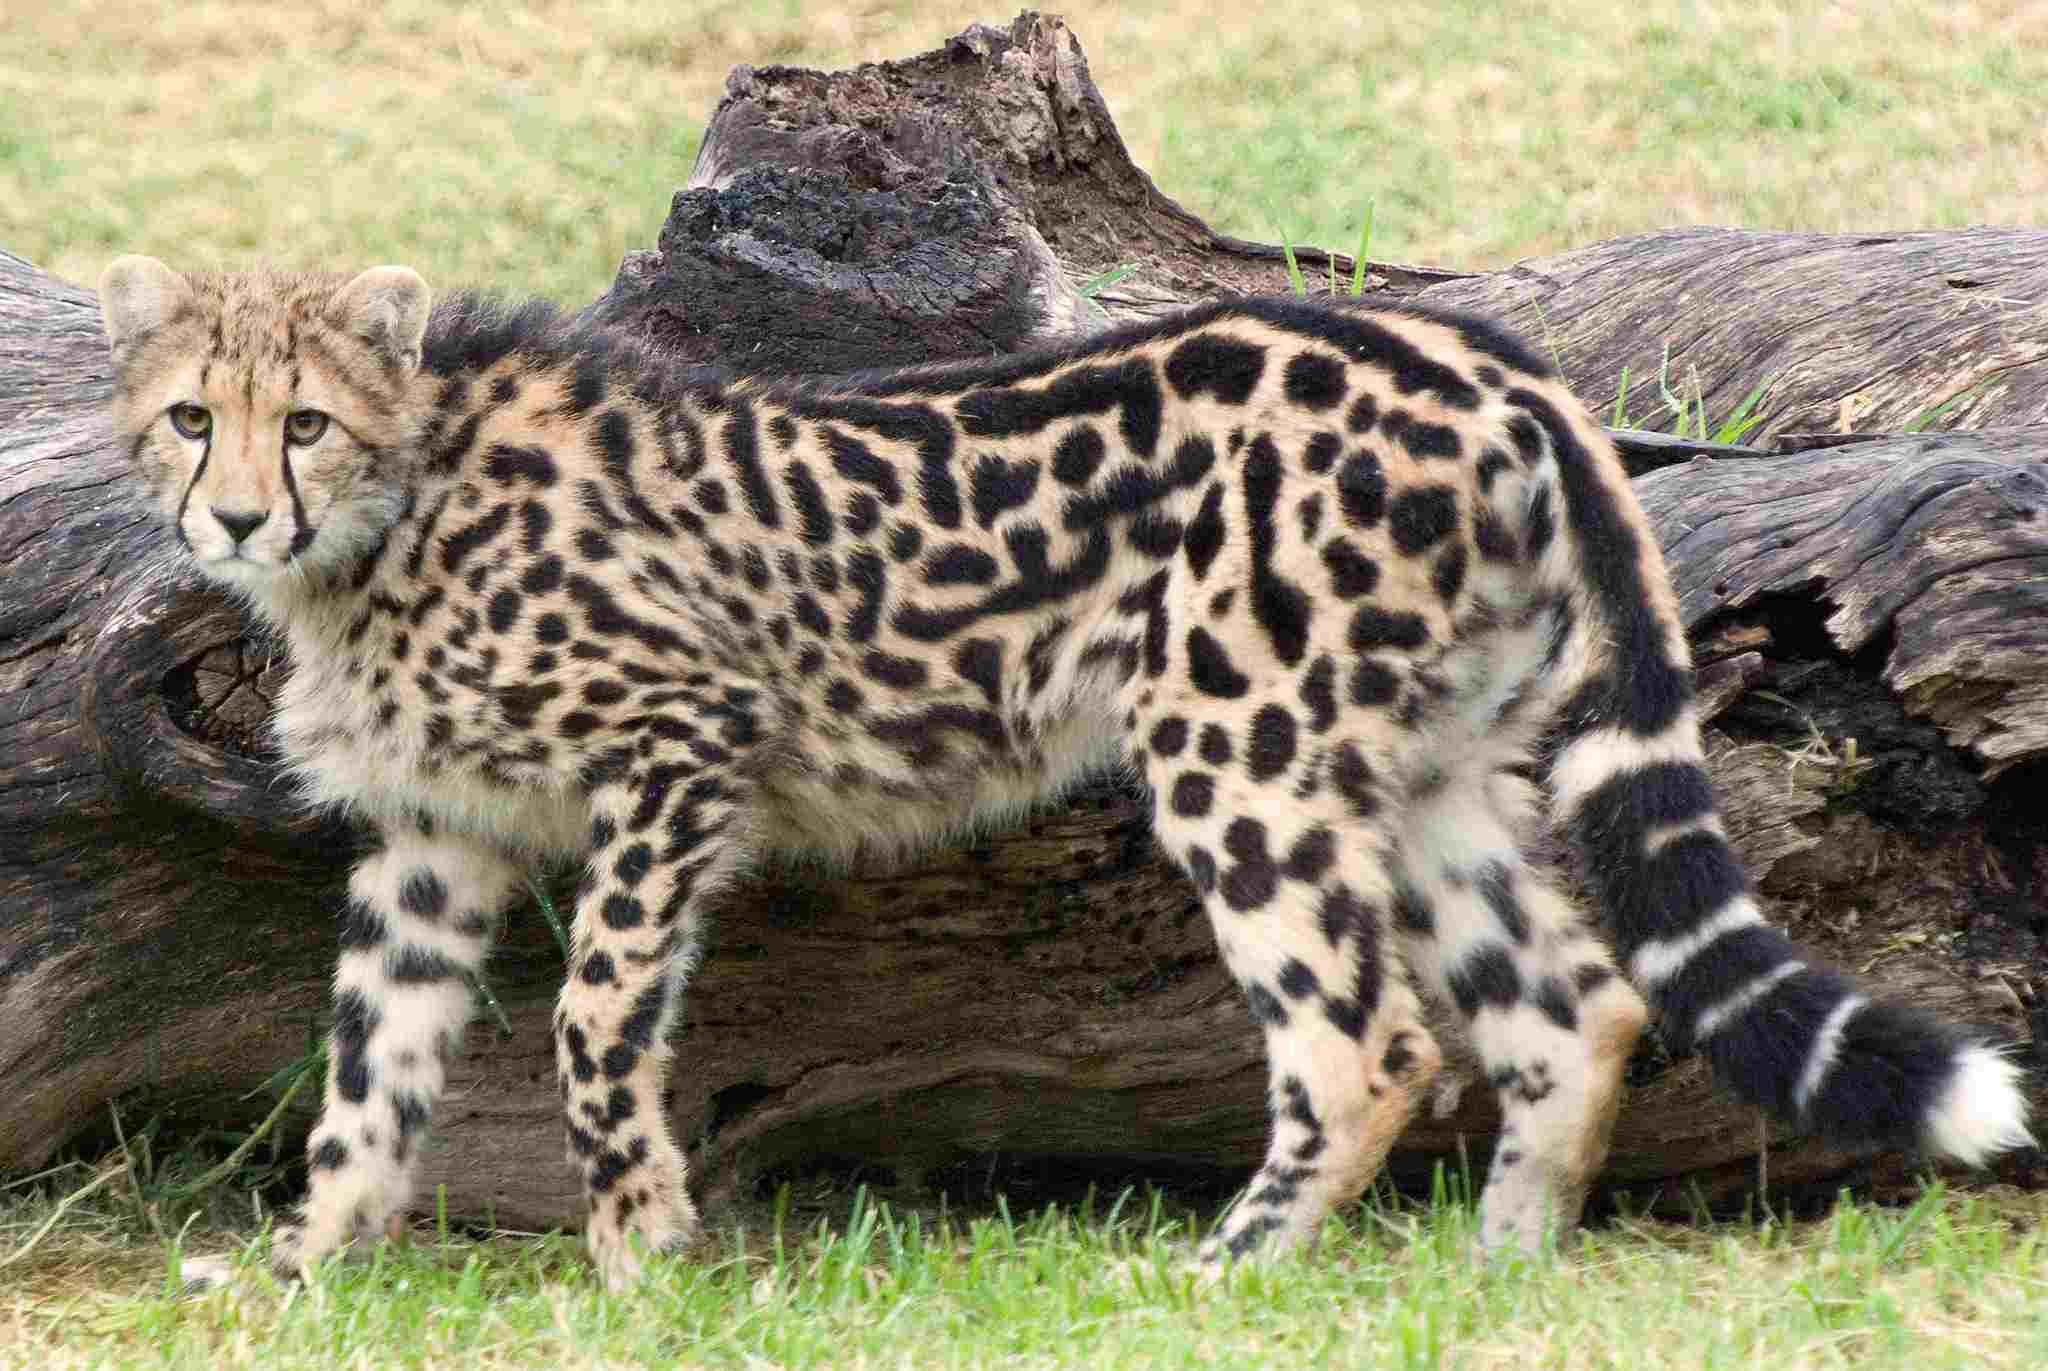 King Cheetah Vs Cheetah: Grasslands are Home to Both King and Normal Cheetahs (Credit: Brad 2010 .CC BY-ND 2.0.)